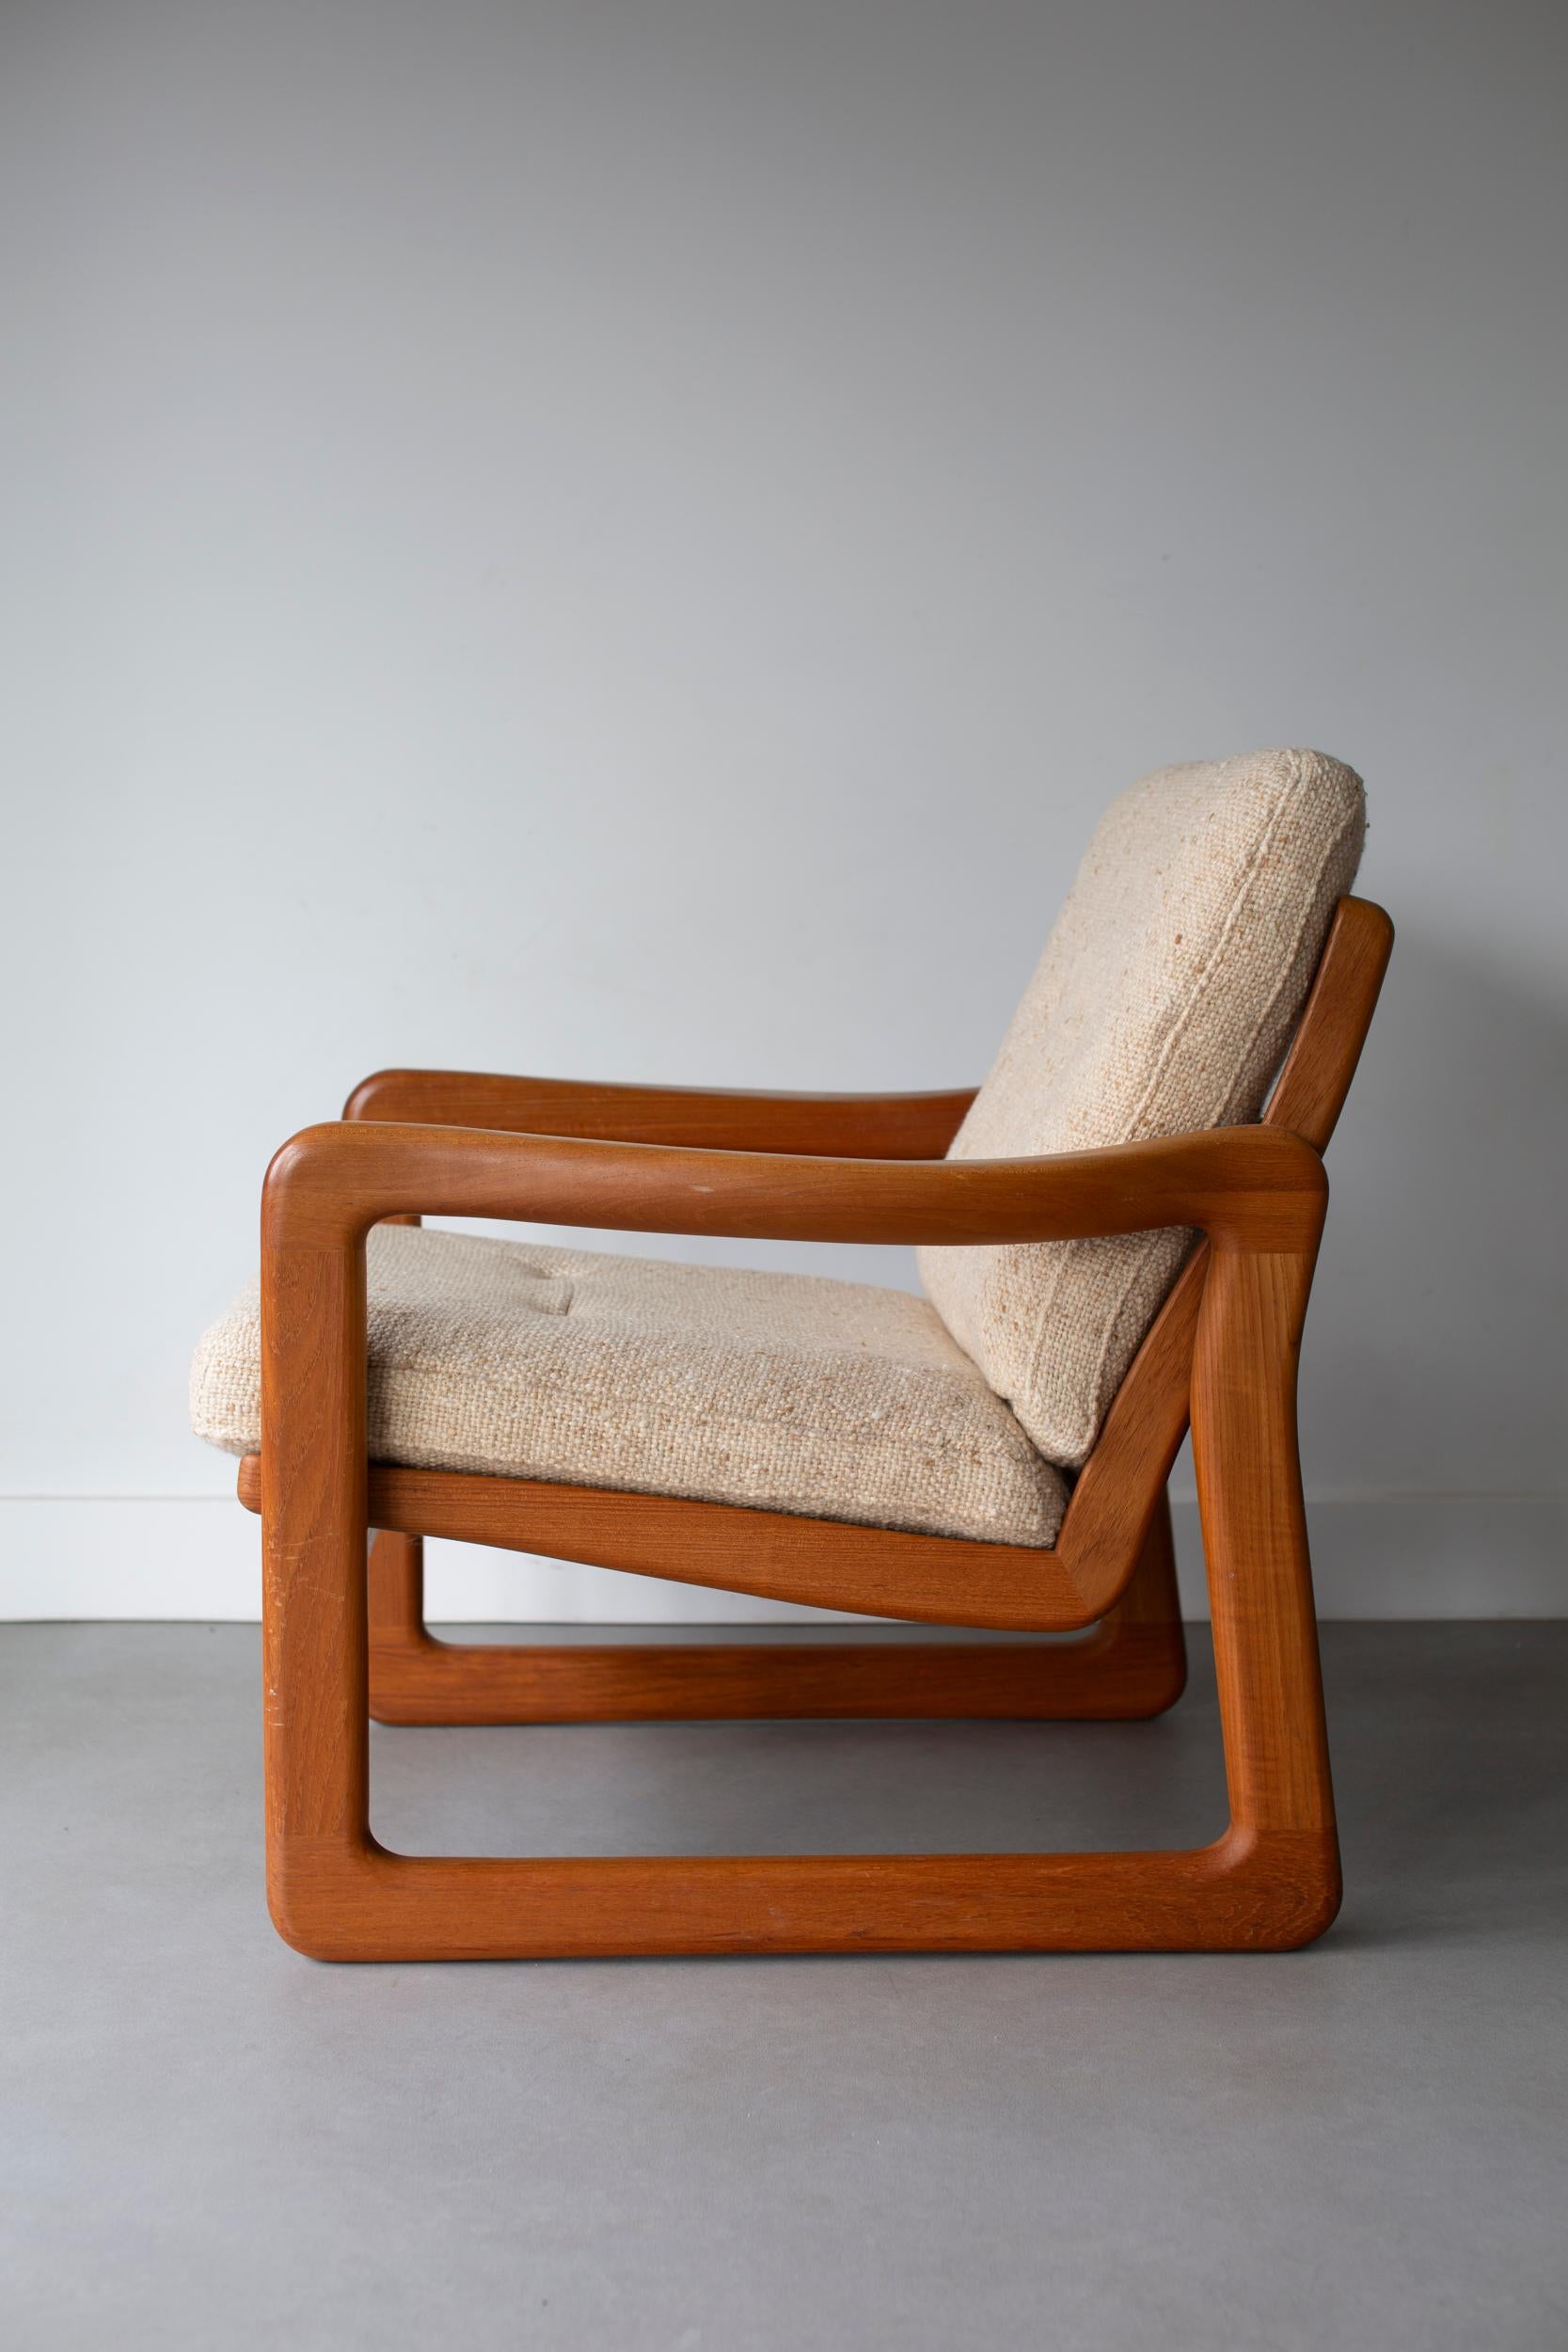 60s lounge chair